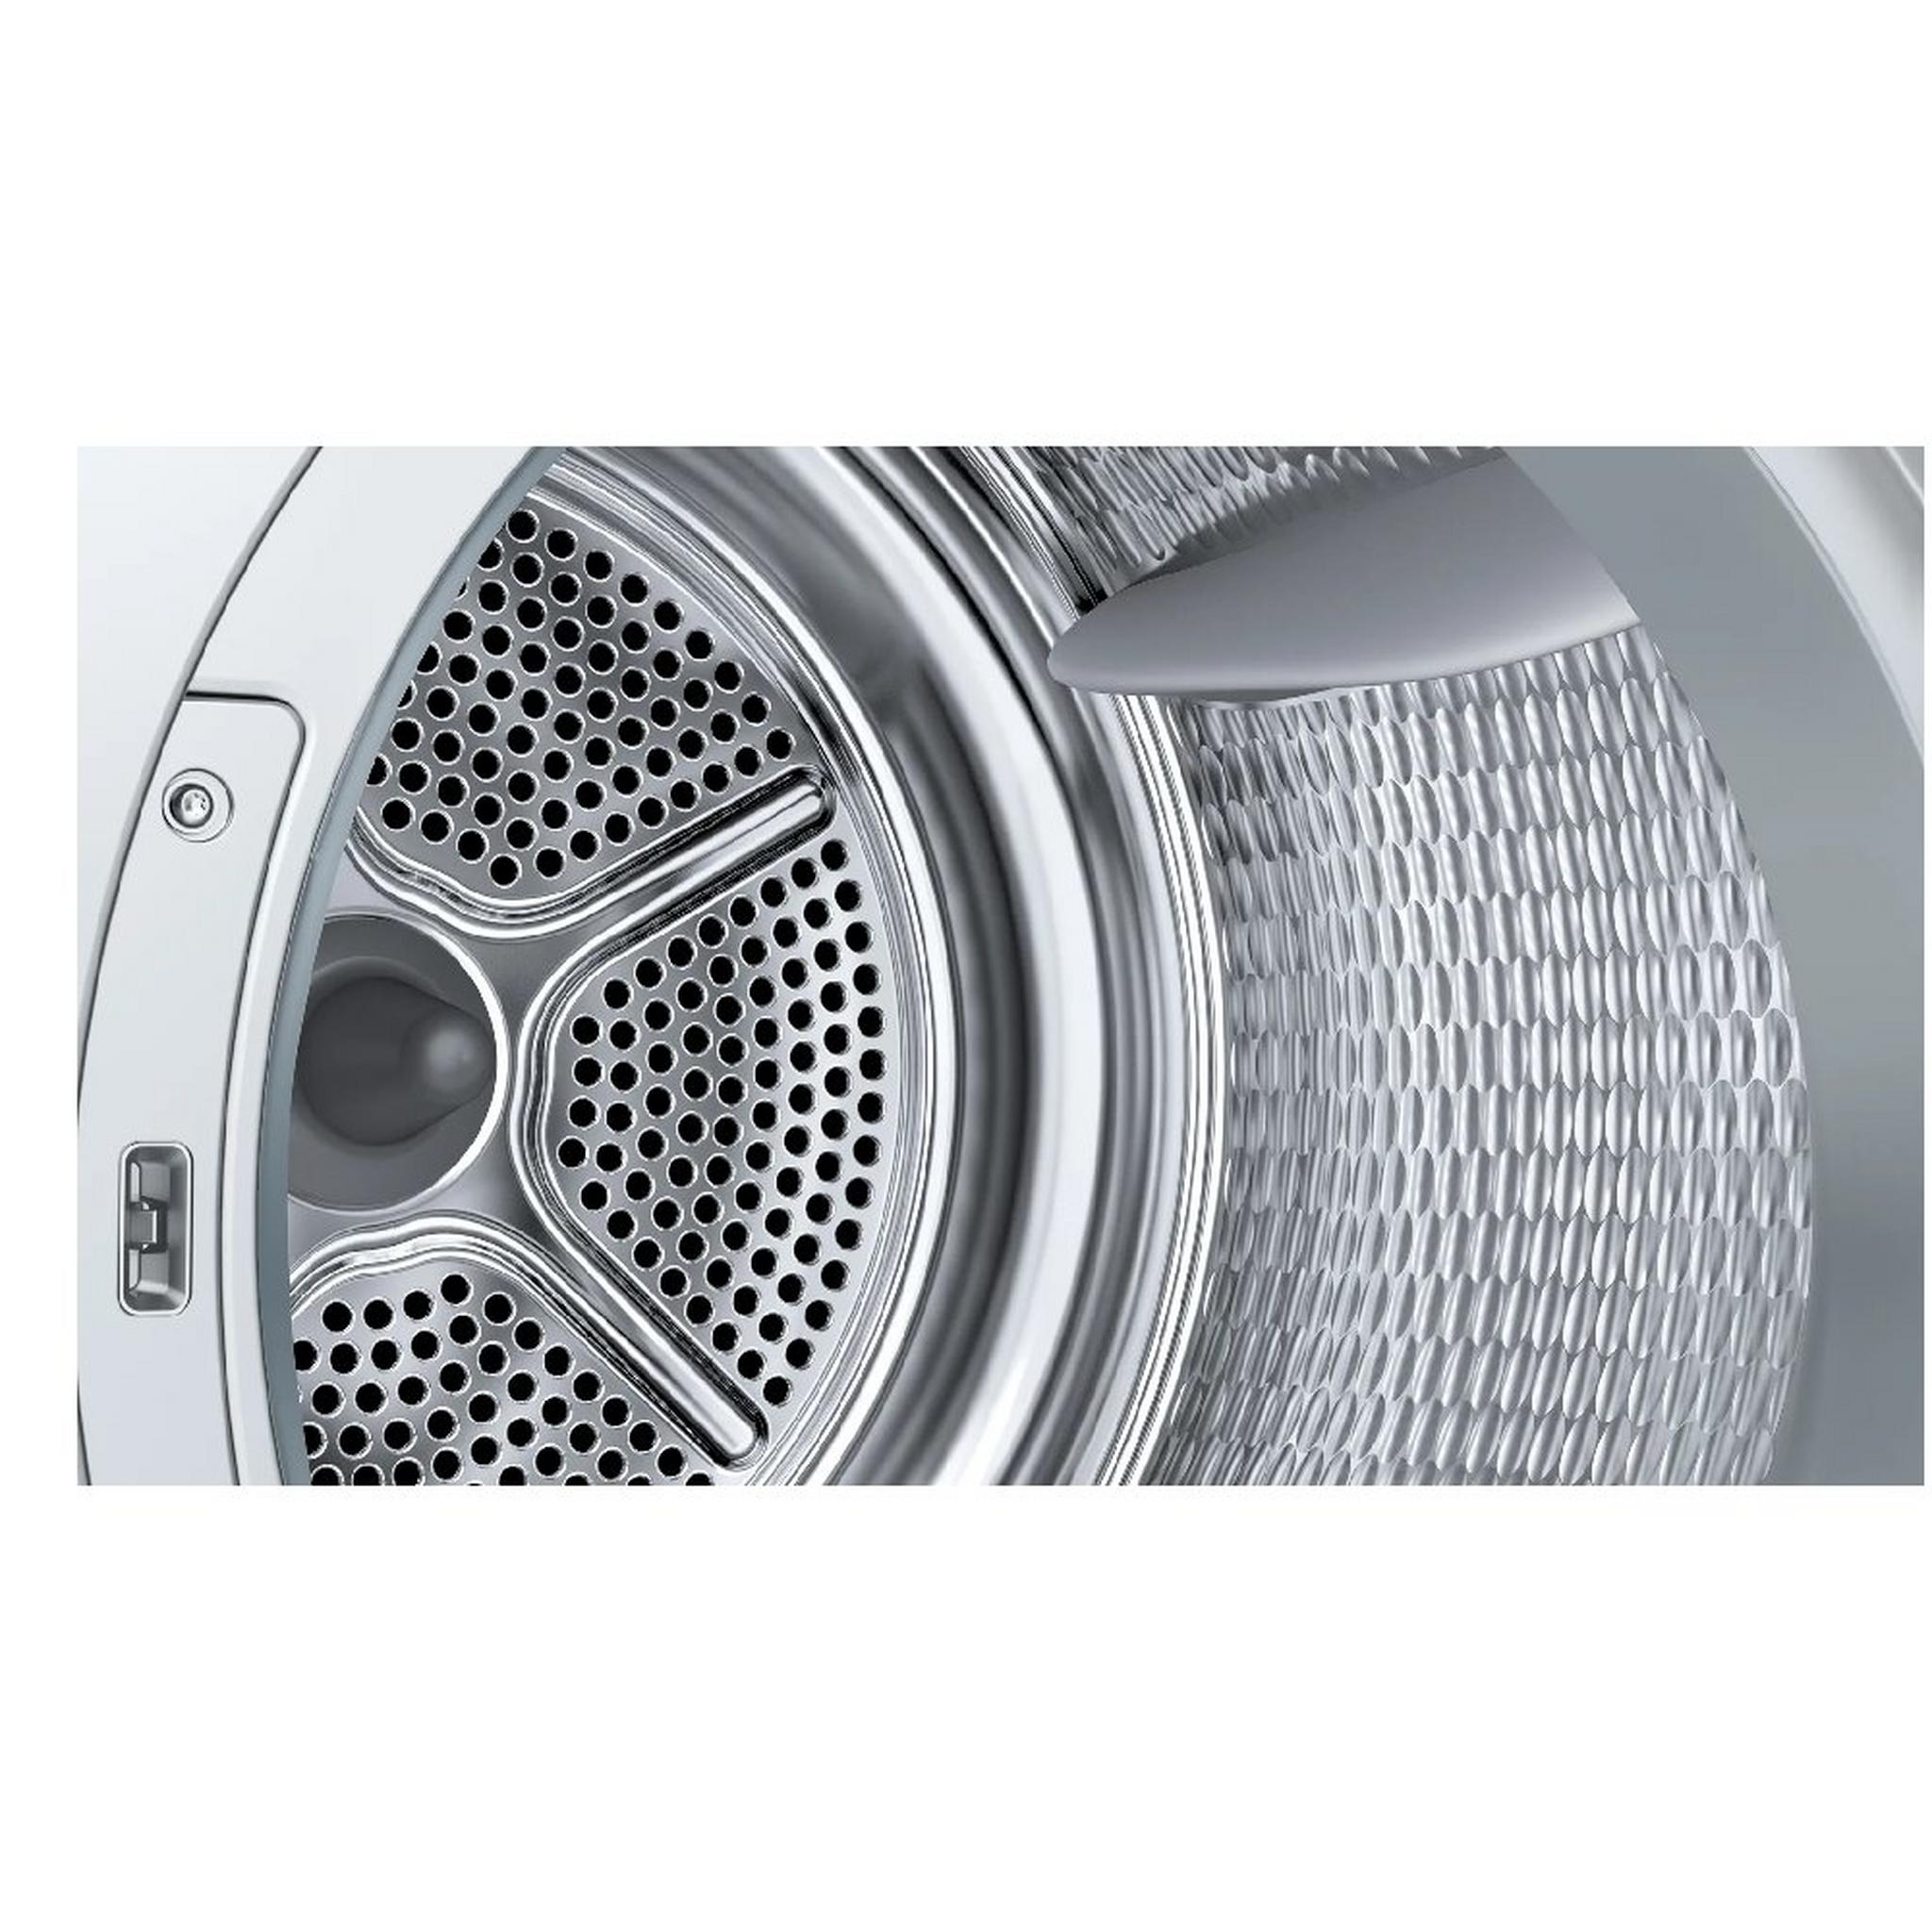 Bosch Front Load Heat Pump Tumble Dryer 9 kg, WQG24200GC - White